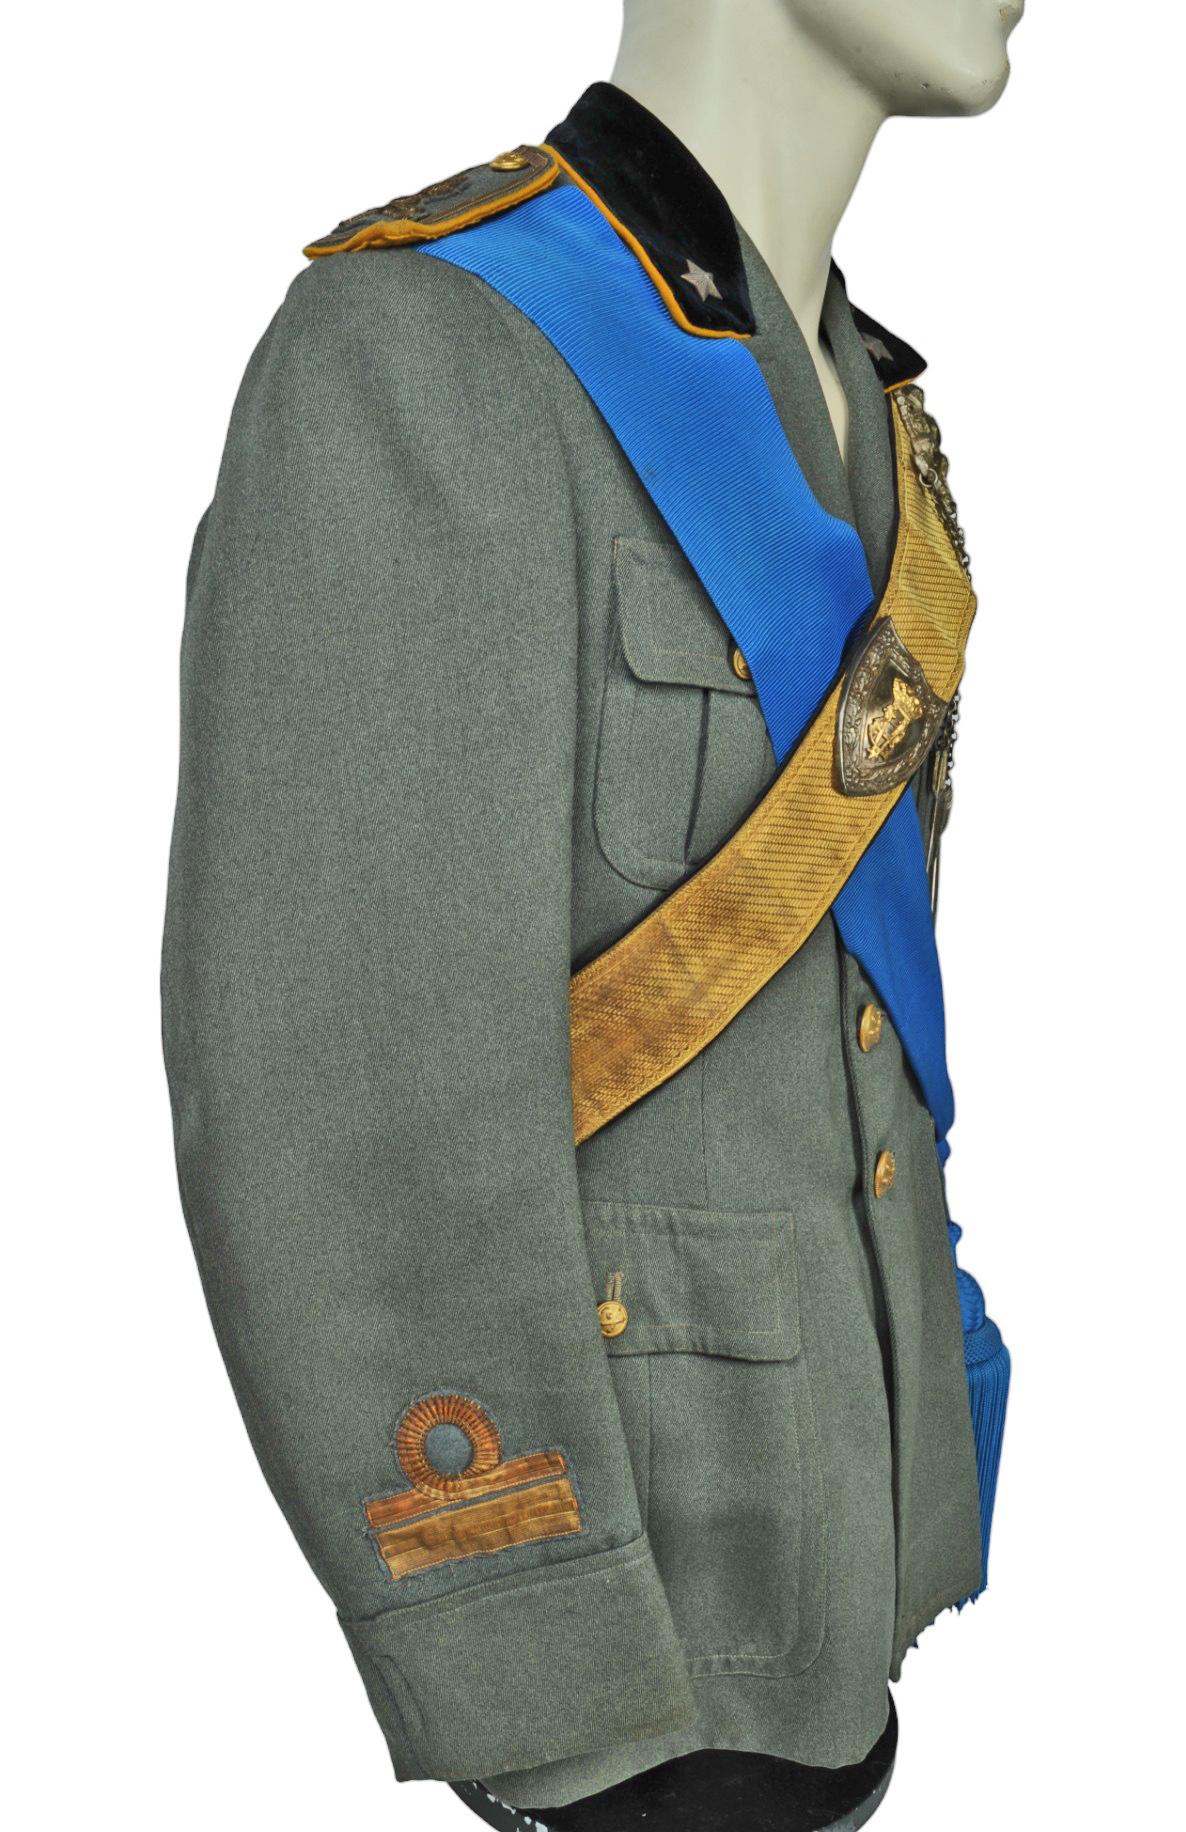 Fascist Italian Army WWII Infrantry Officer Uniform & Visor Hat (KDW)